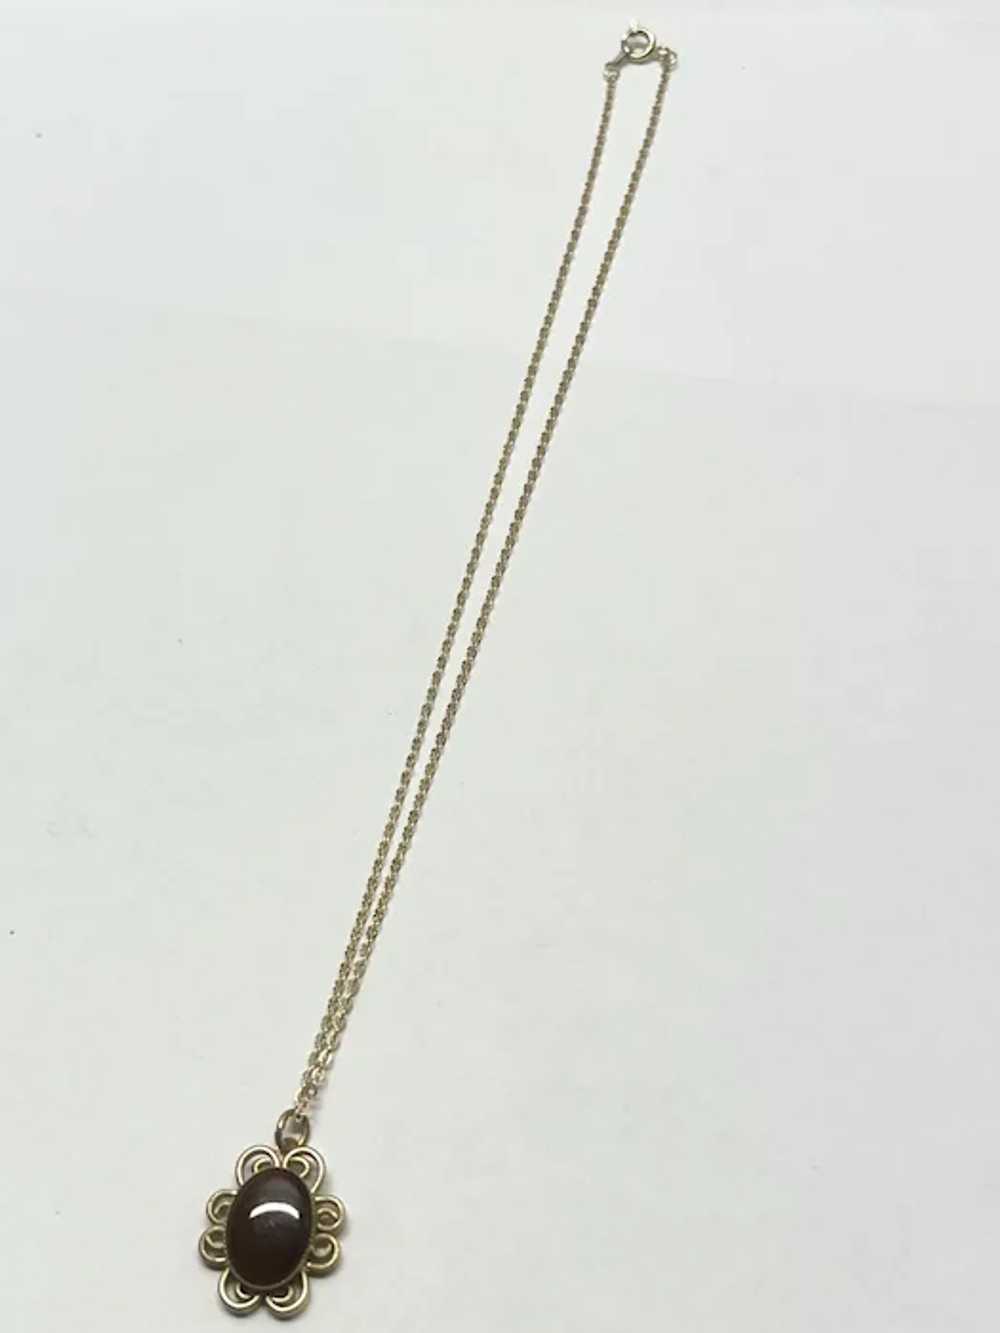 Vintage stone flower pendant charm necklace - image 3